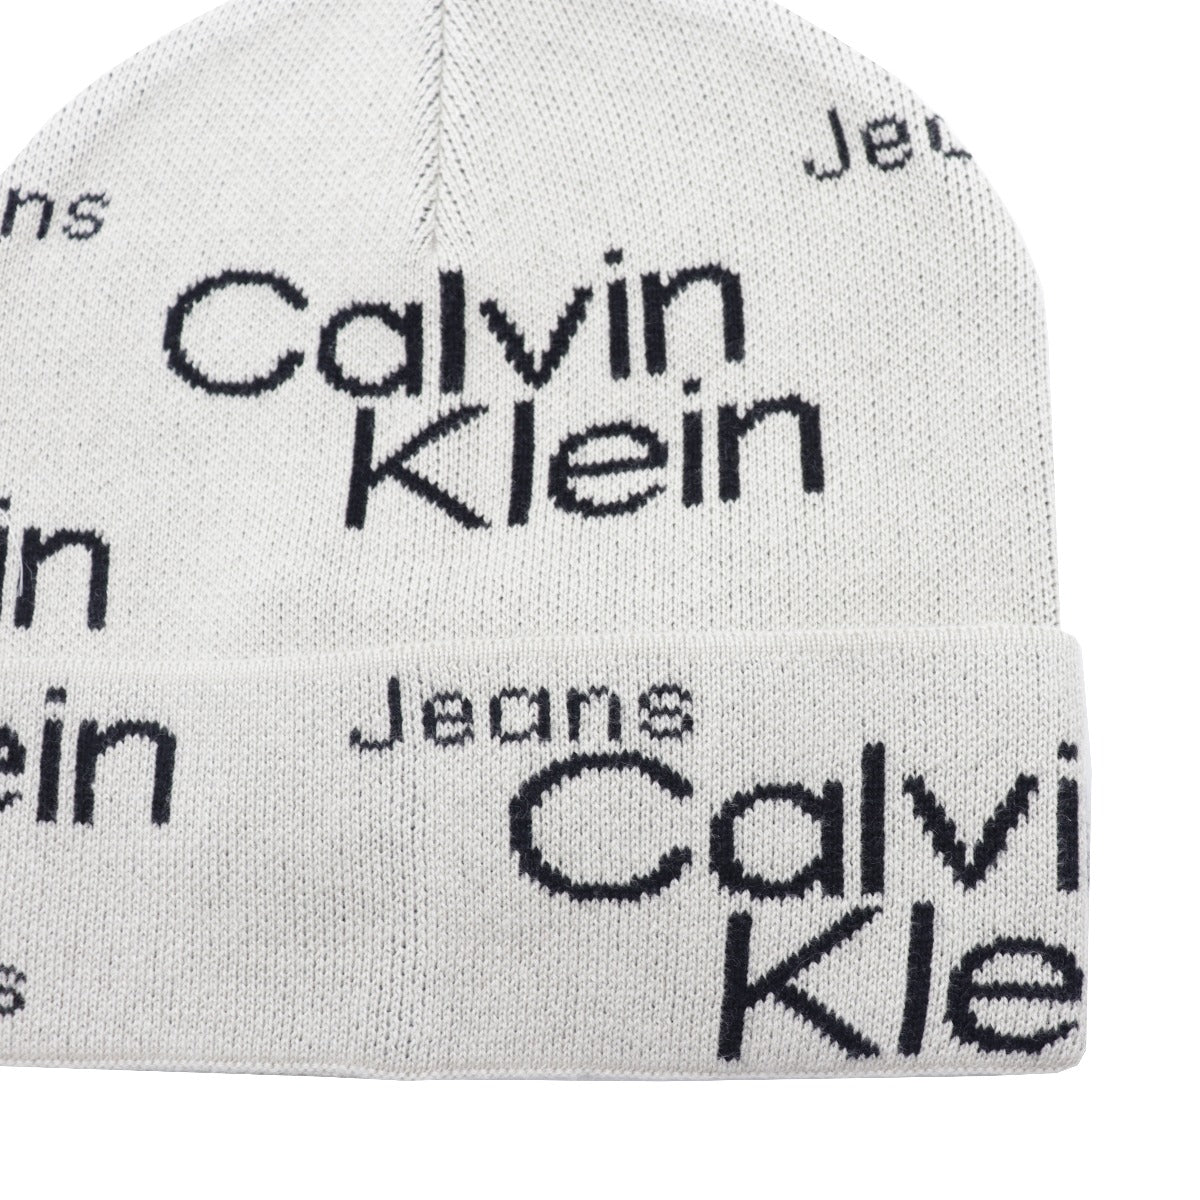 Calvin Klein Men's Hat with Beige Lettering Logo